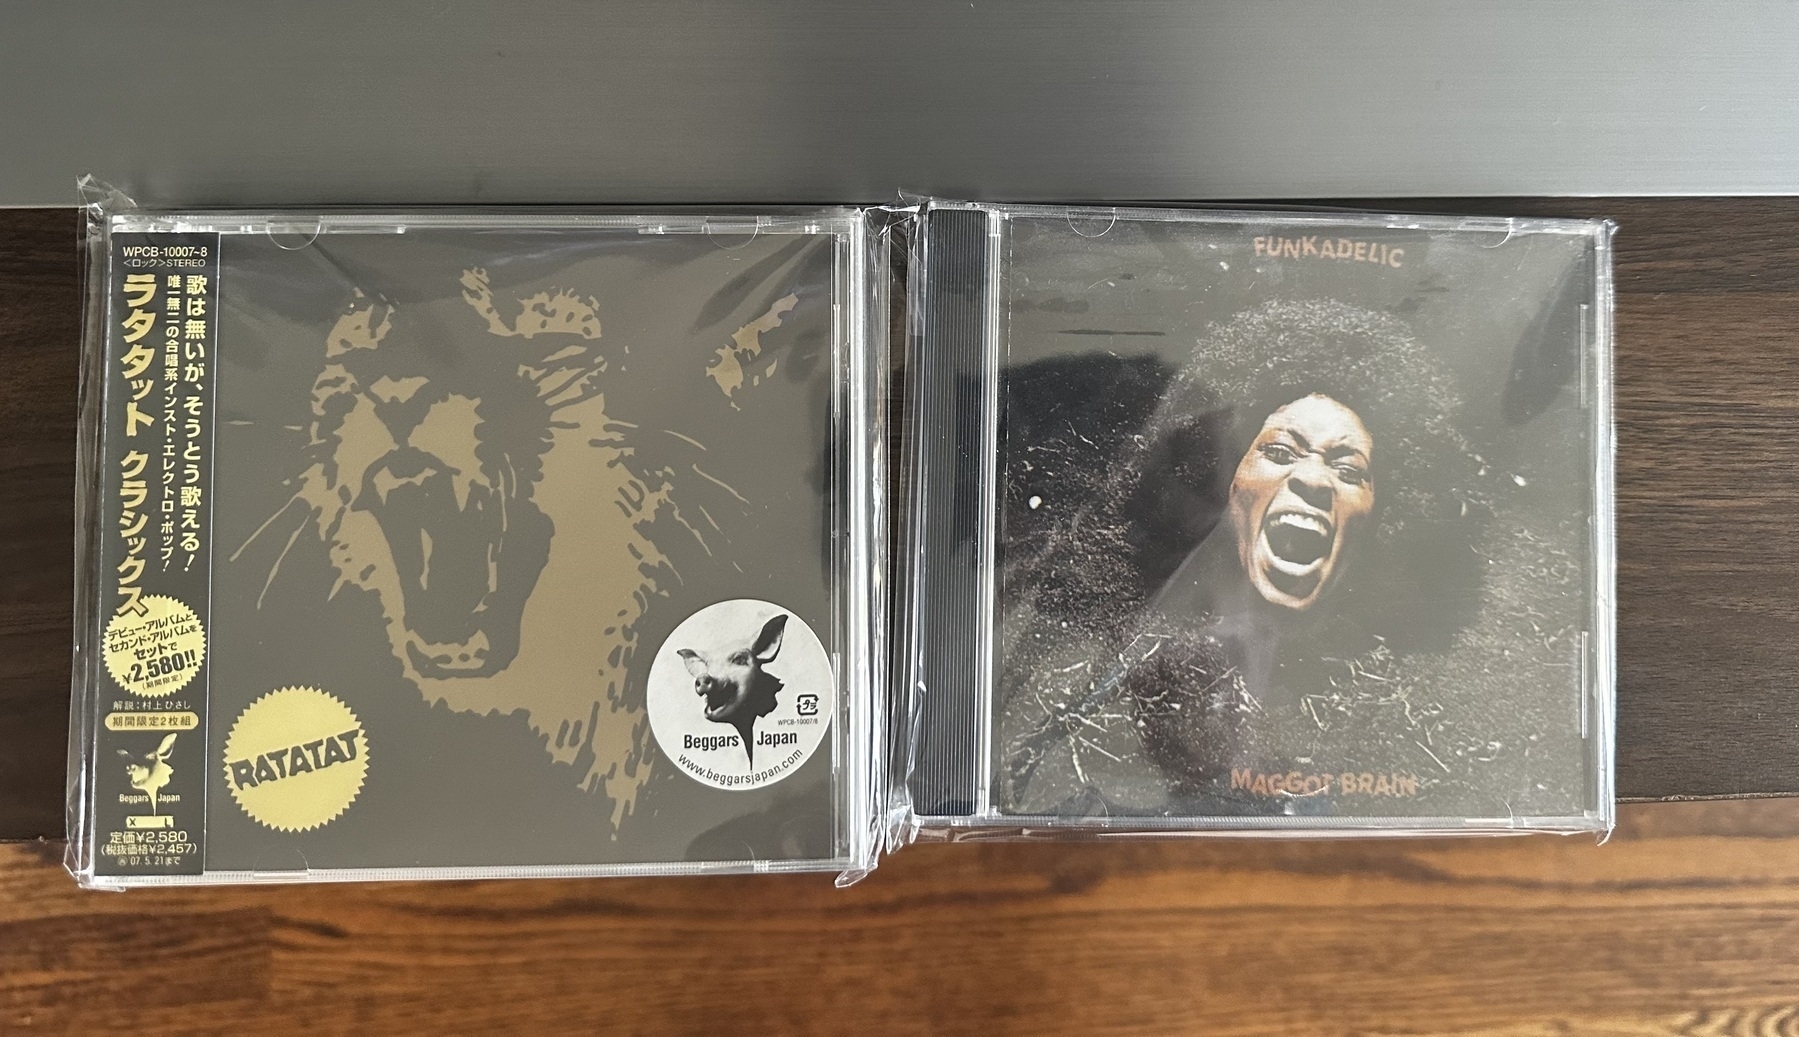 CDs of “Maggot Brain” by Funkadelic and “Ratatat/Classics” by Ratatat